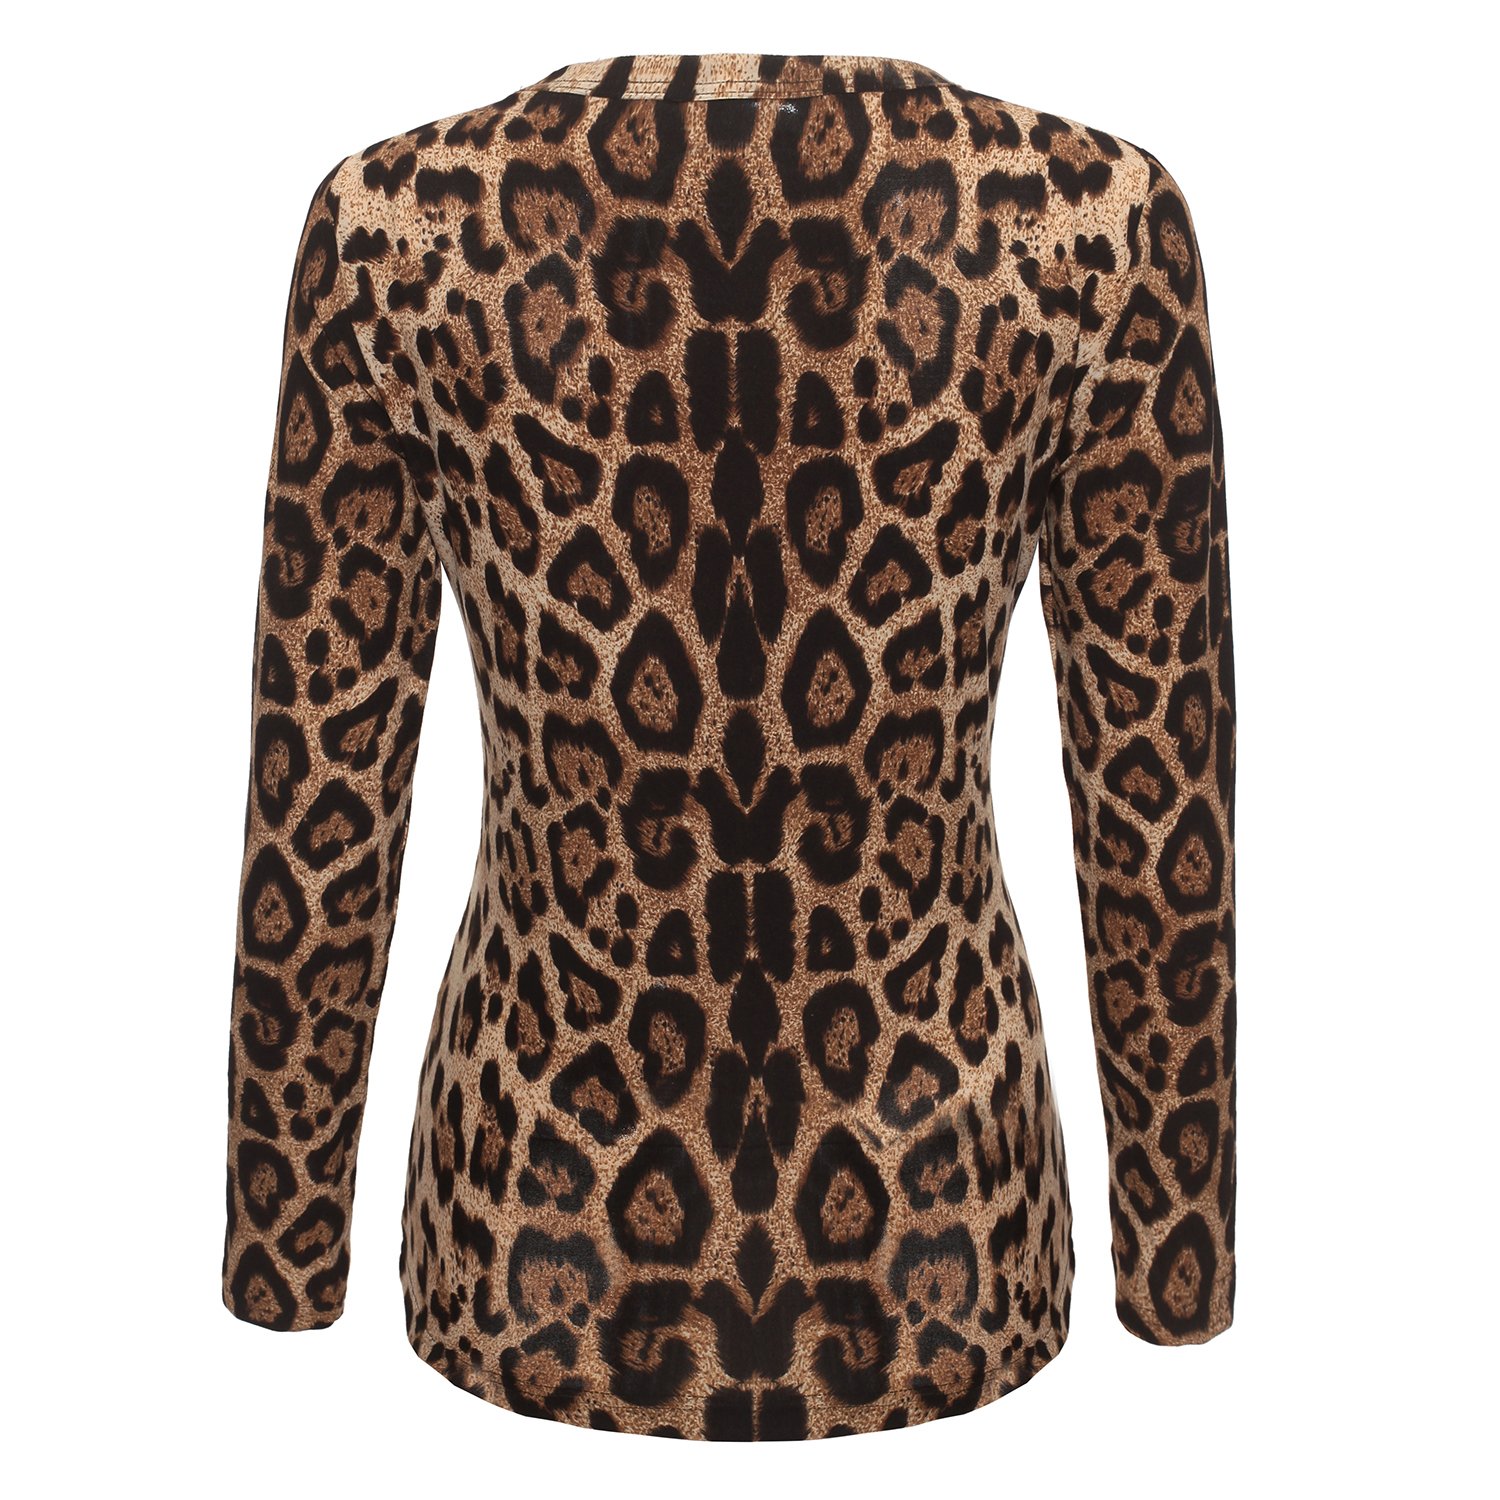 Modern-Tee Women's Round Crew Neck Leopard Printed Fashion T-Shirt Long Sleeve Tops